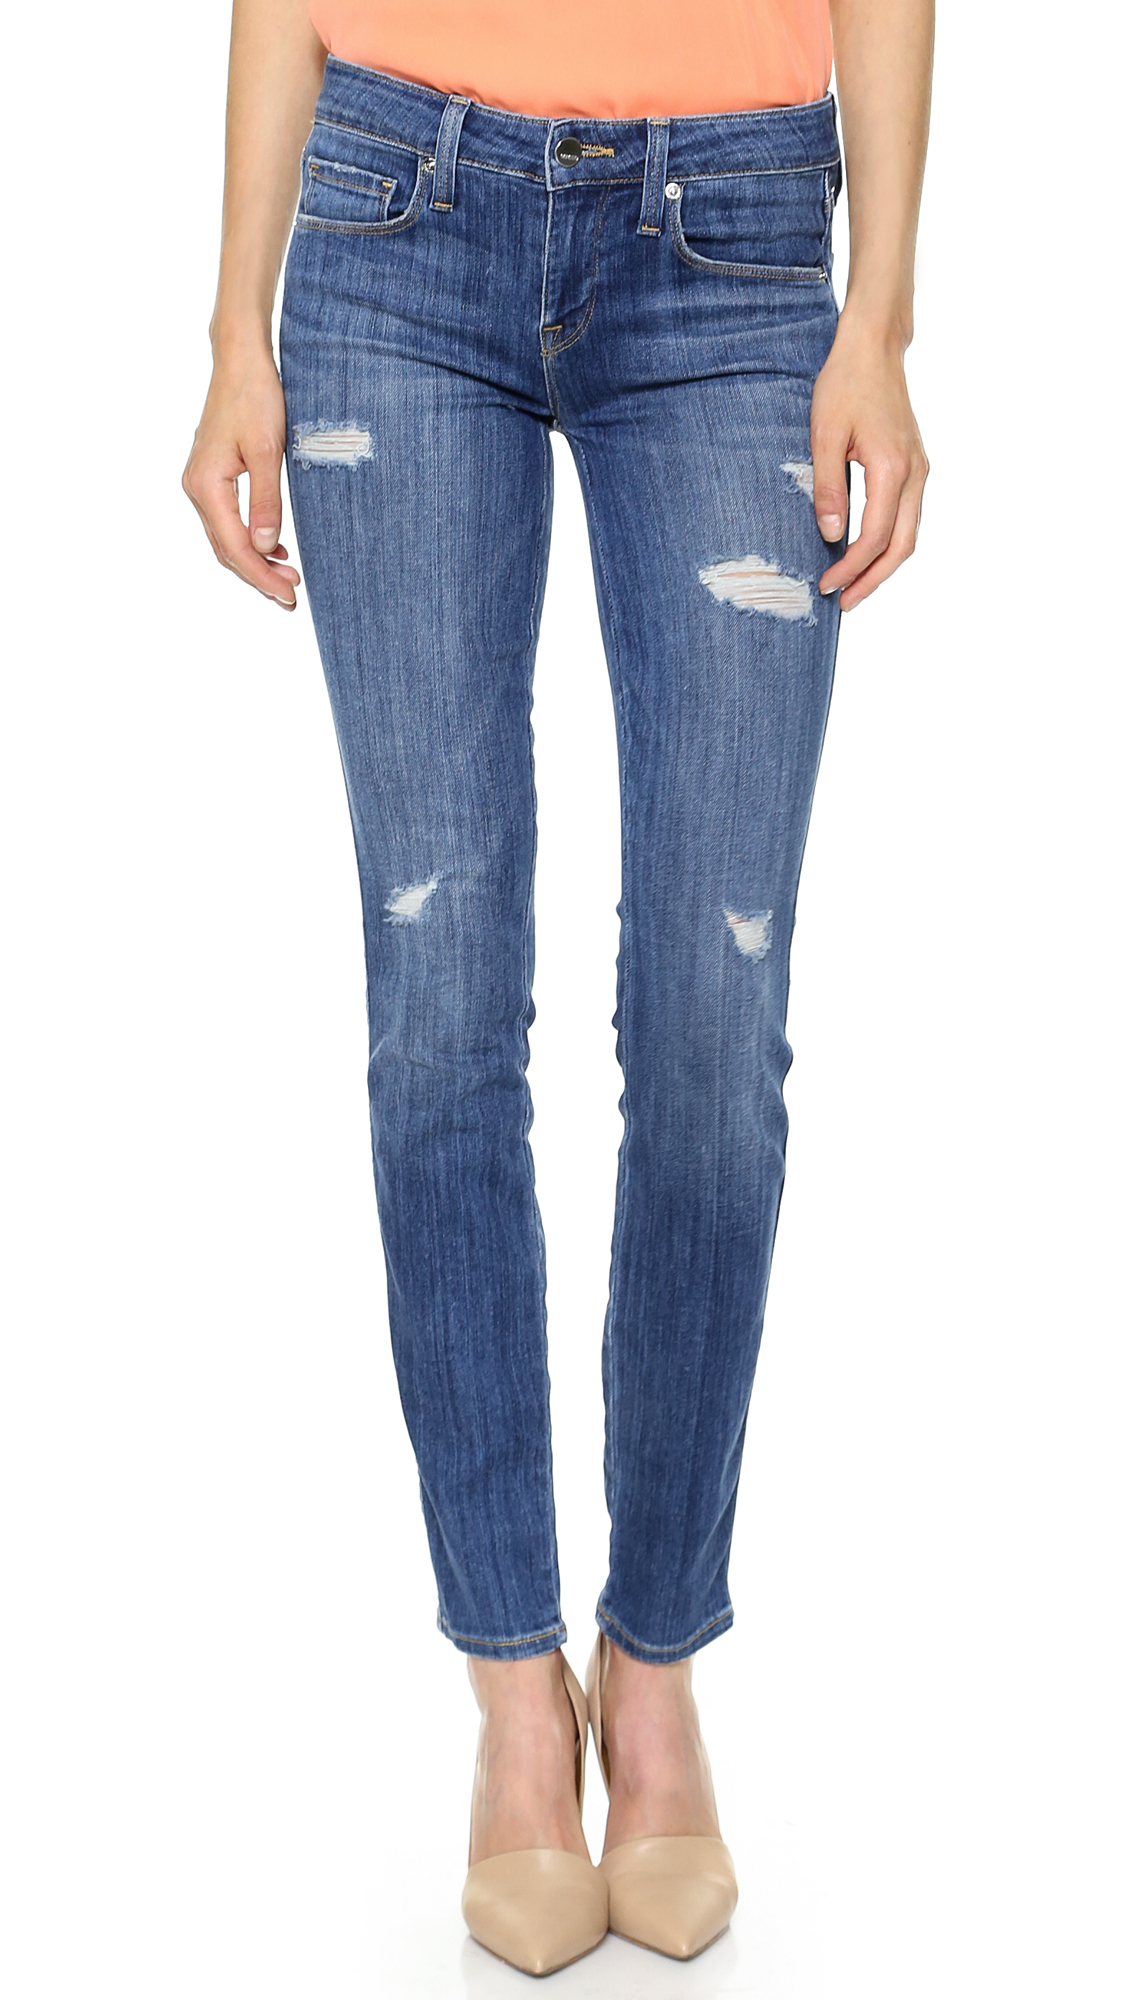 Lyst - Genetic Denim Shya Skinny Jeans - Complex in Blue